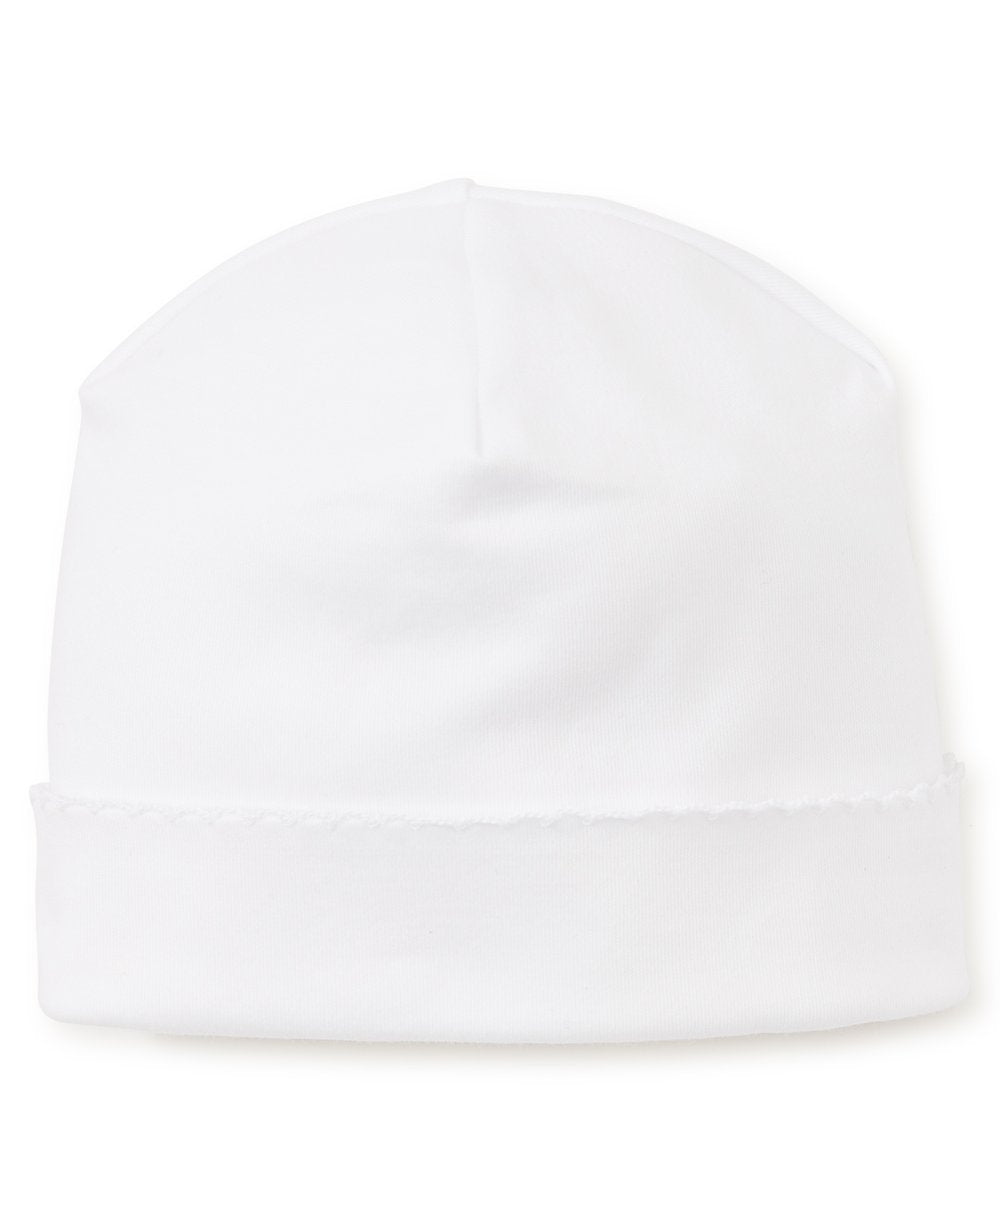 Kissy Basic Hat - White With White,